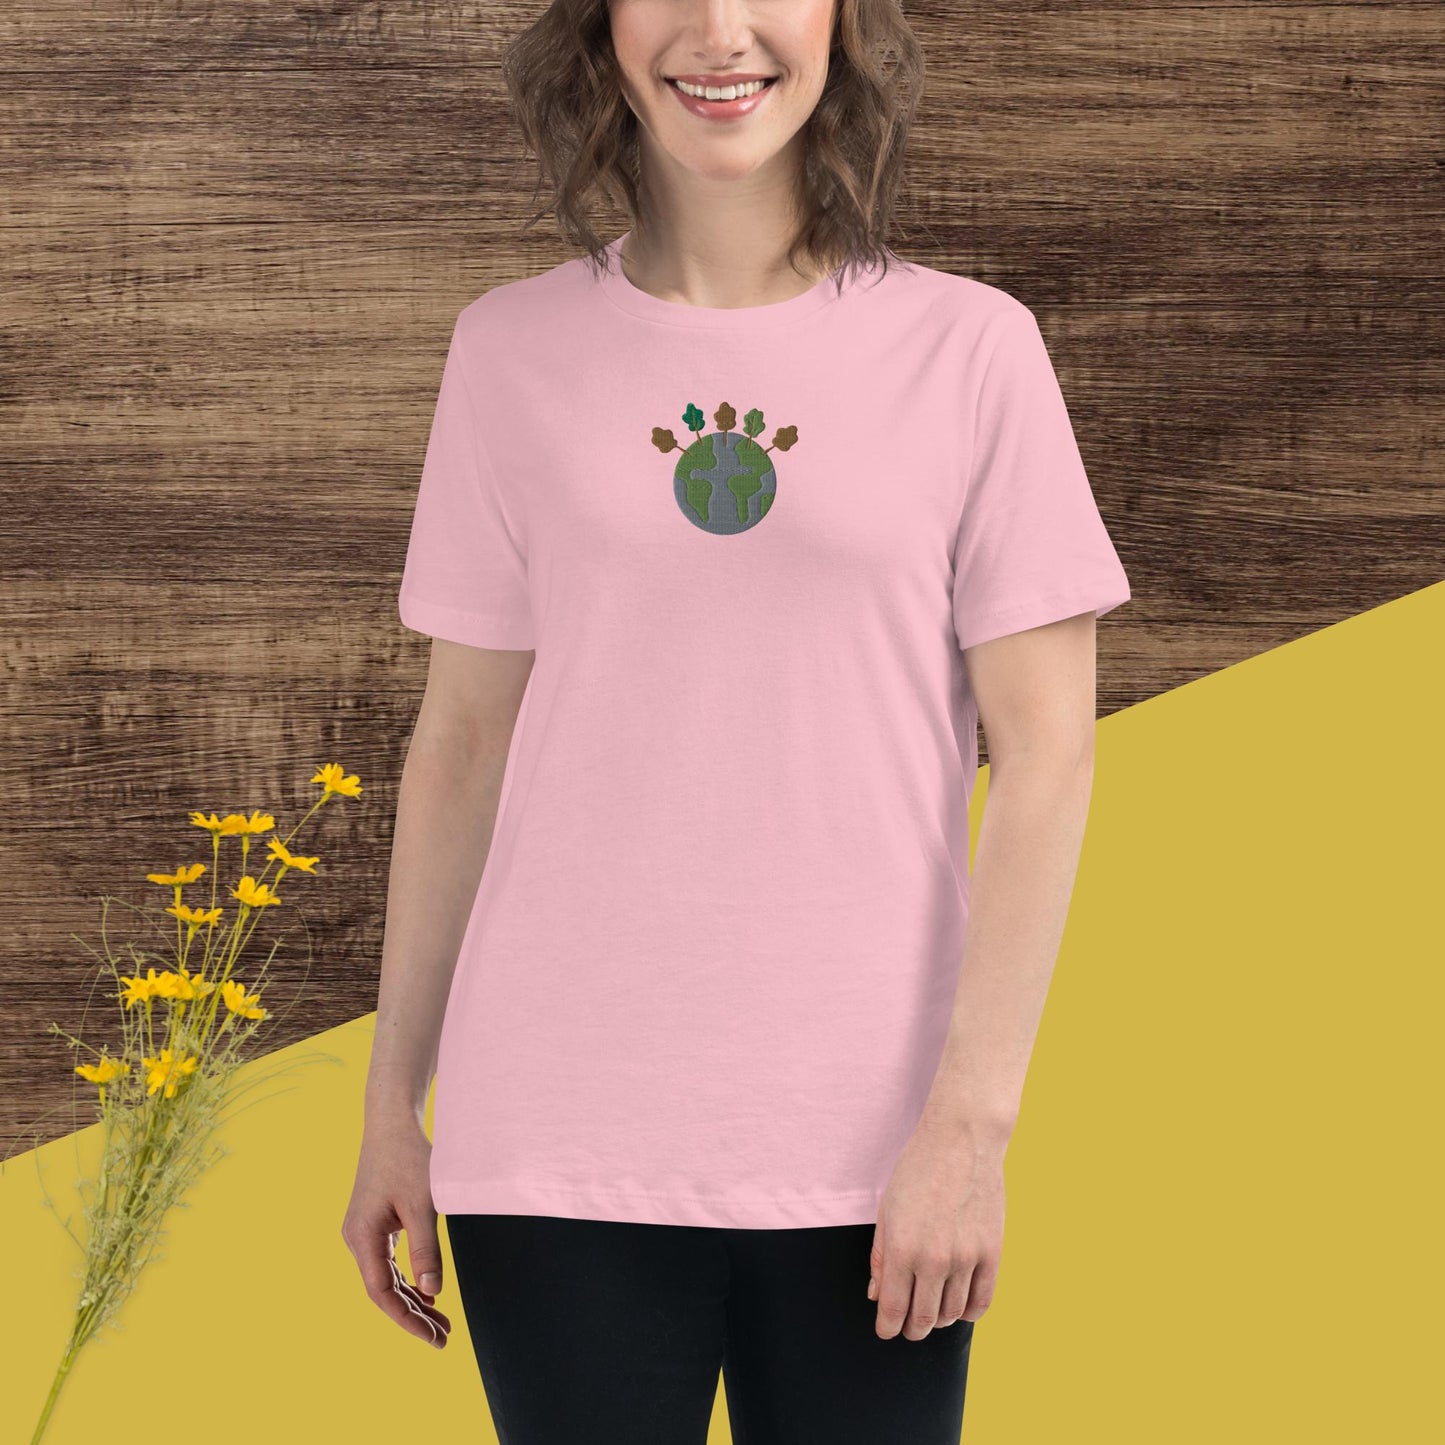 Camiseta bordada planta un árbol mujer